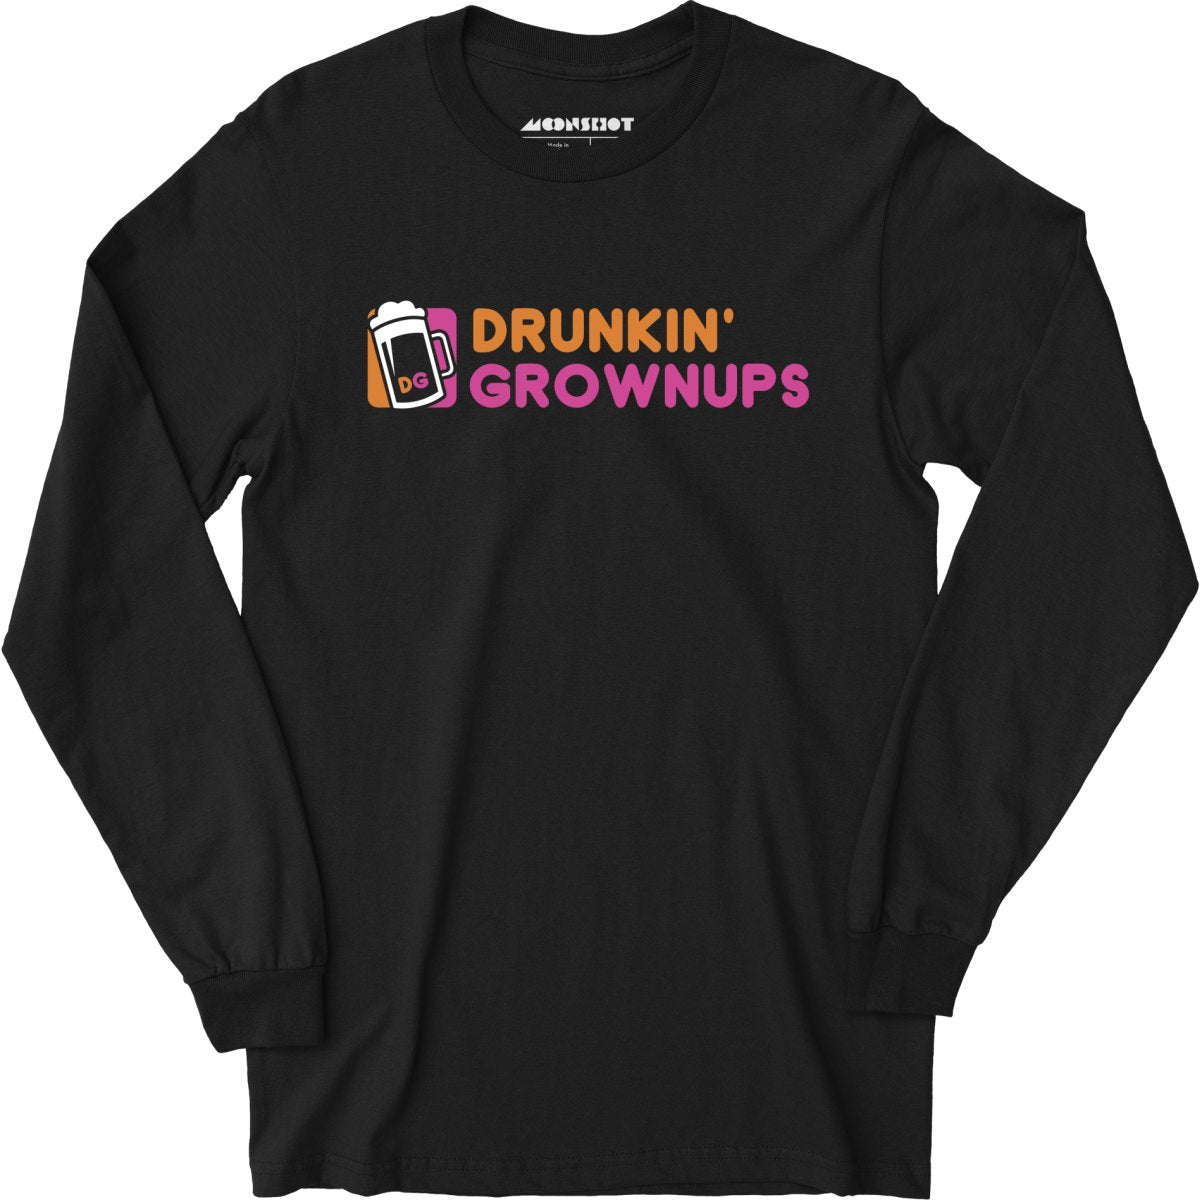 Drunkin' Grownups - Long Sleeve T-Shirt